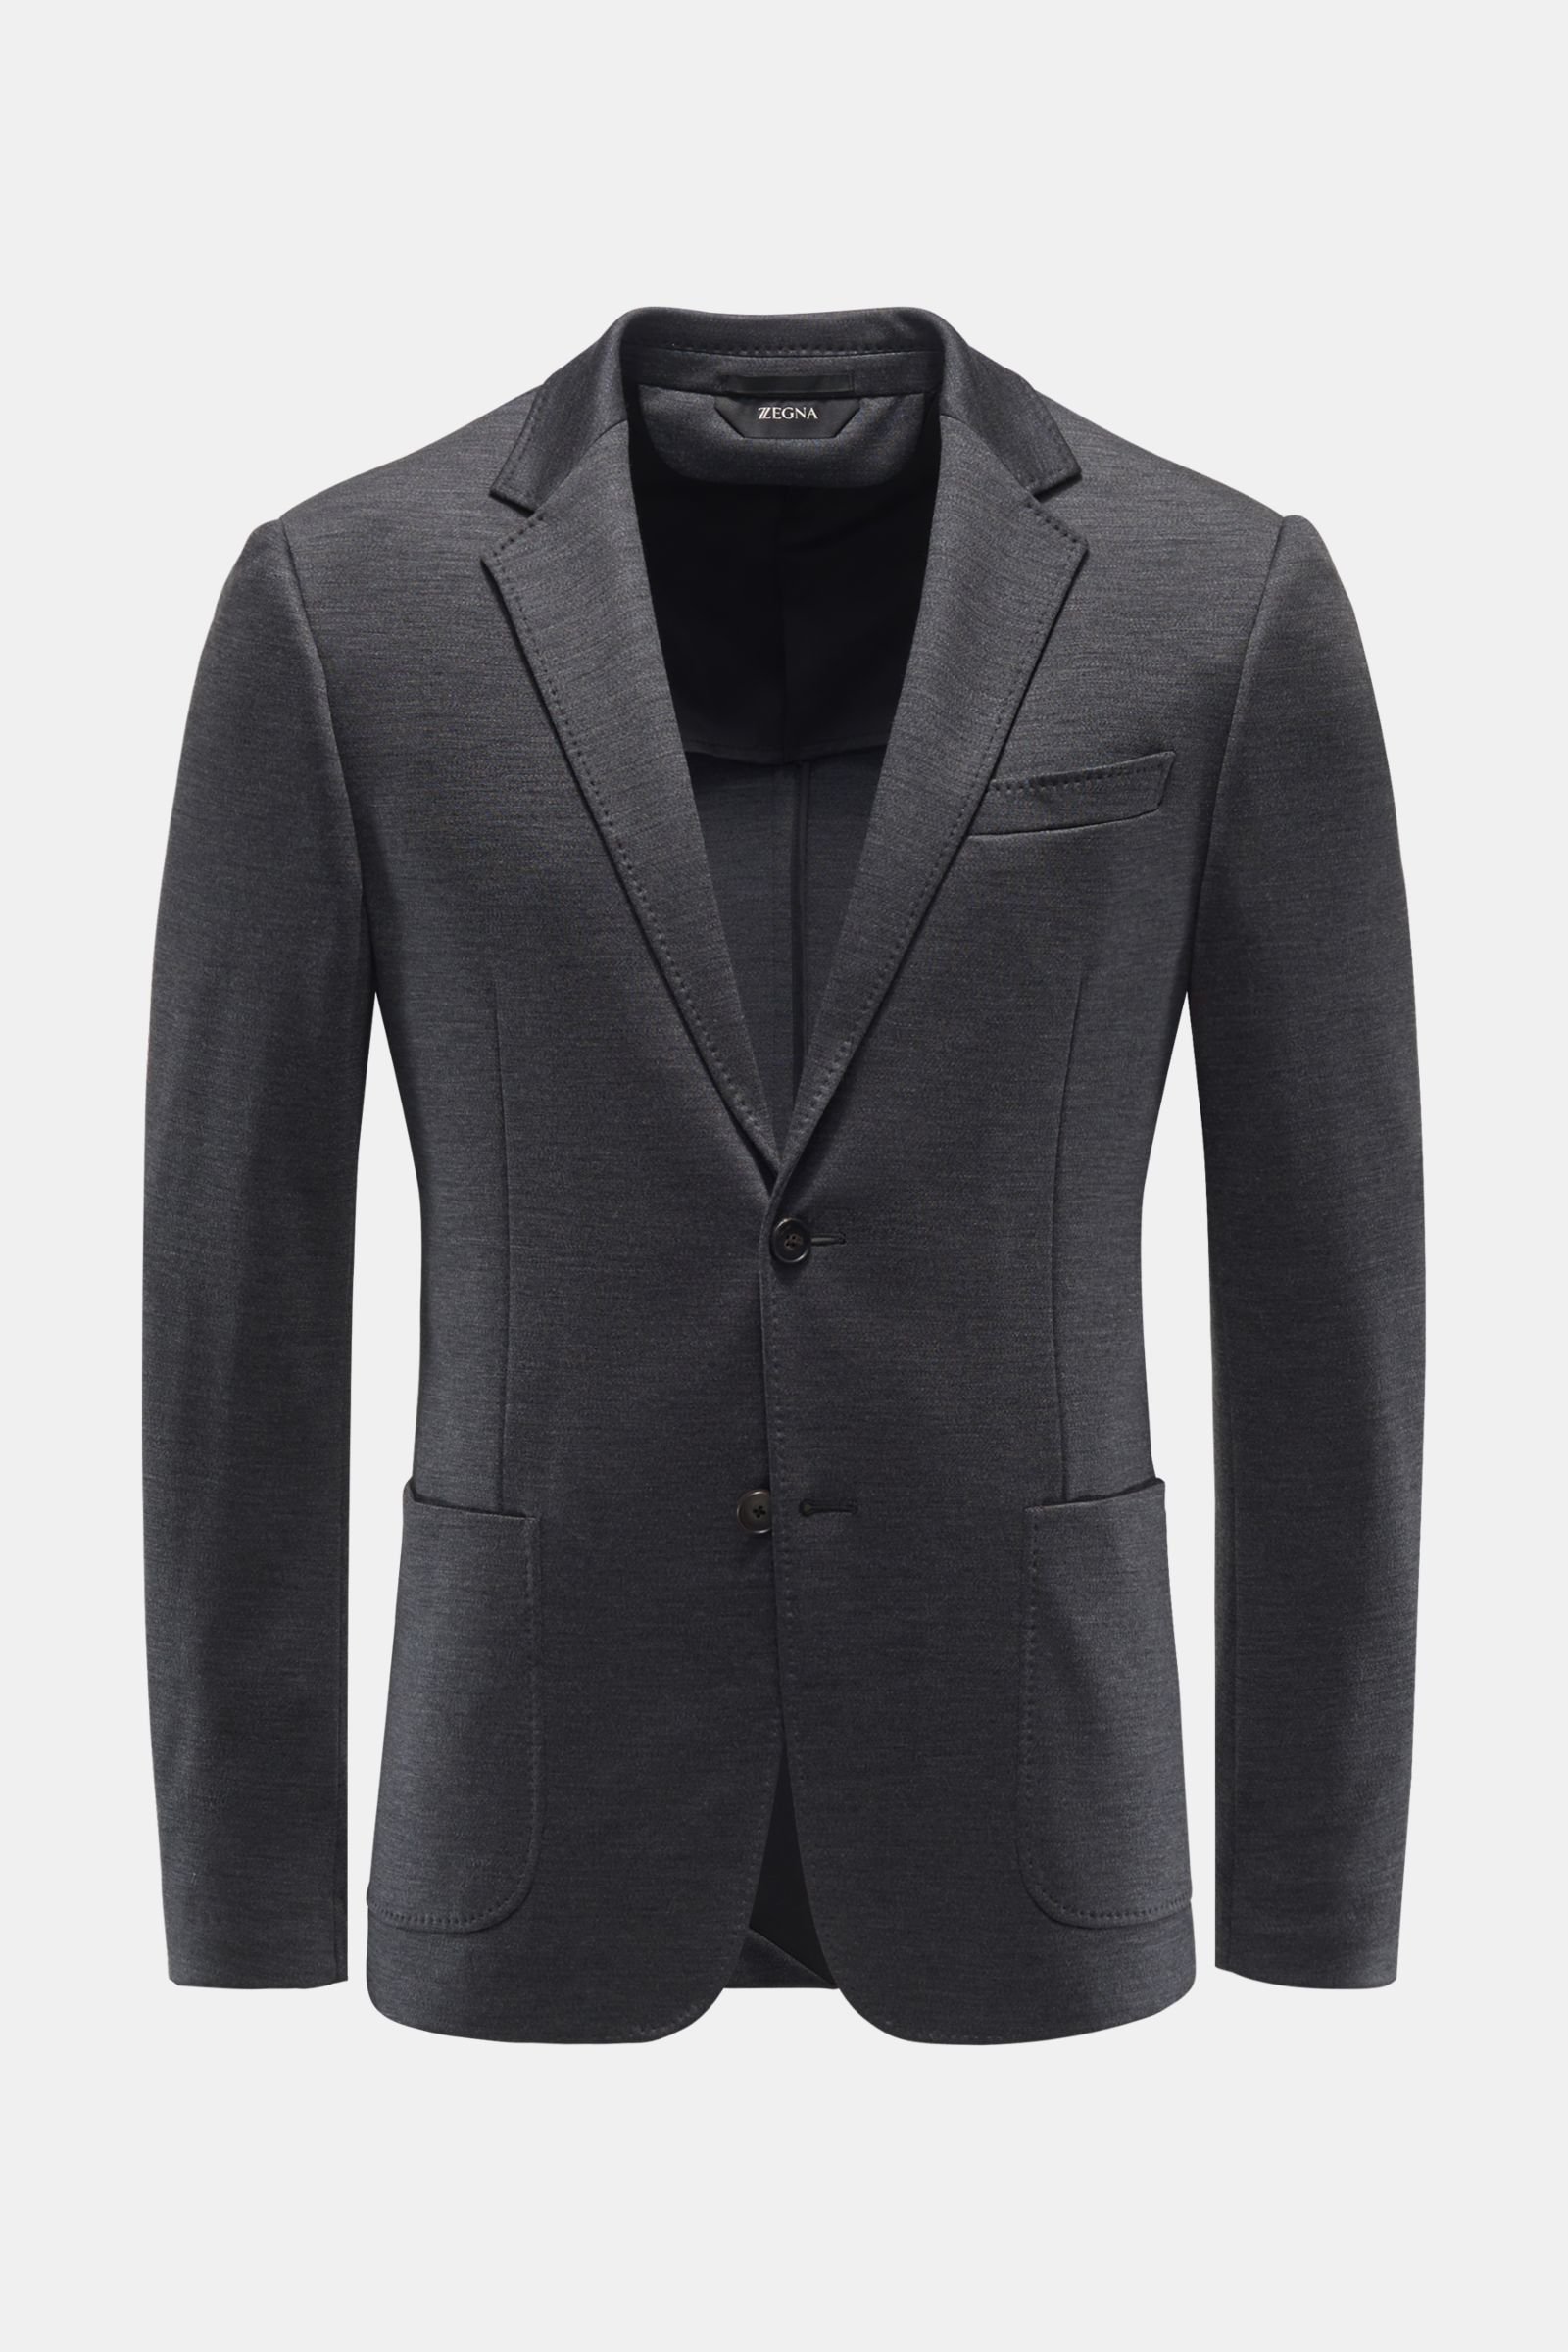 Jersey jacket dark grey